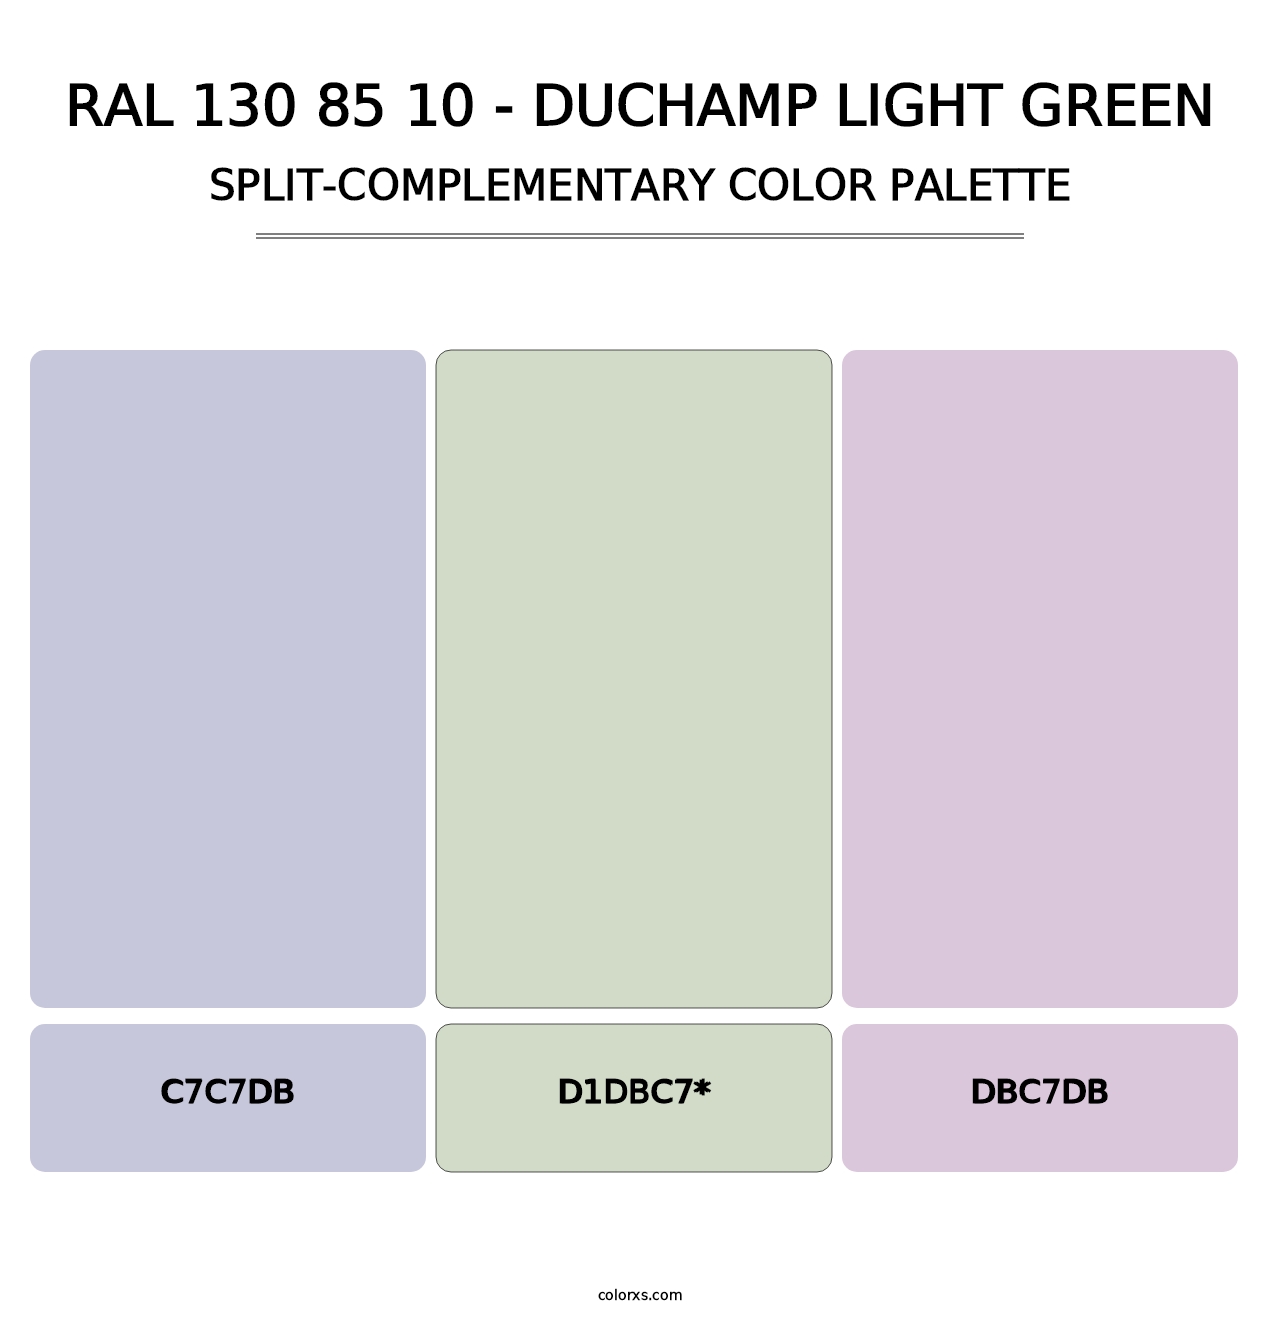 RAL 130 85 10 - Duchamp Light Green - Split-Complementary Color Palette